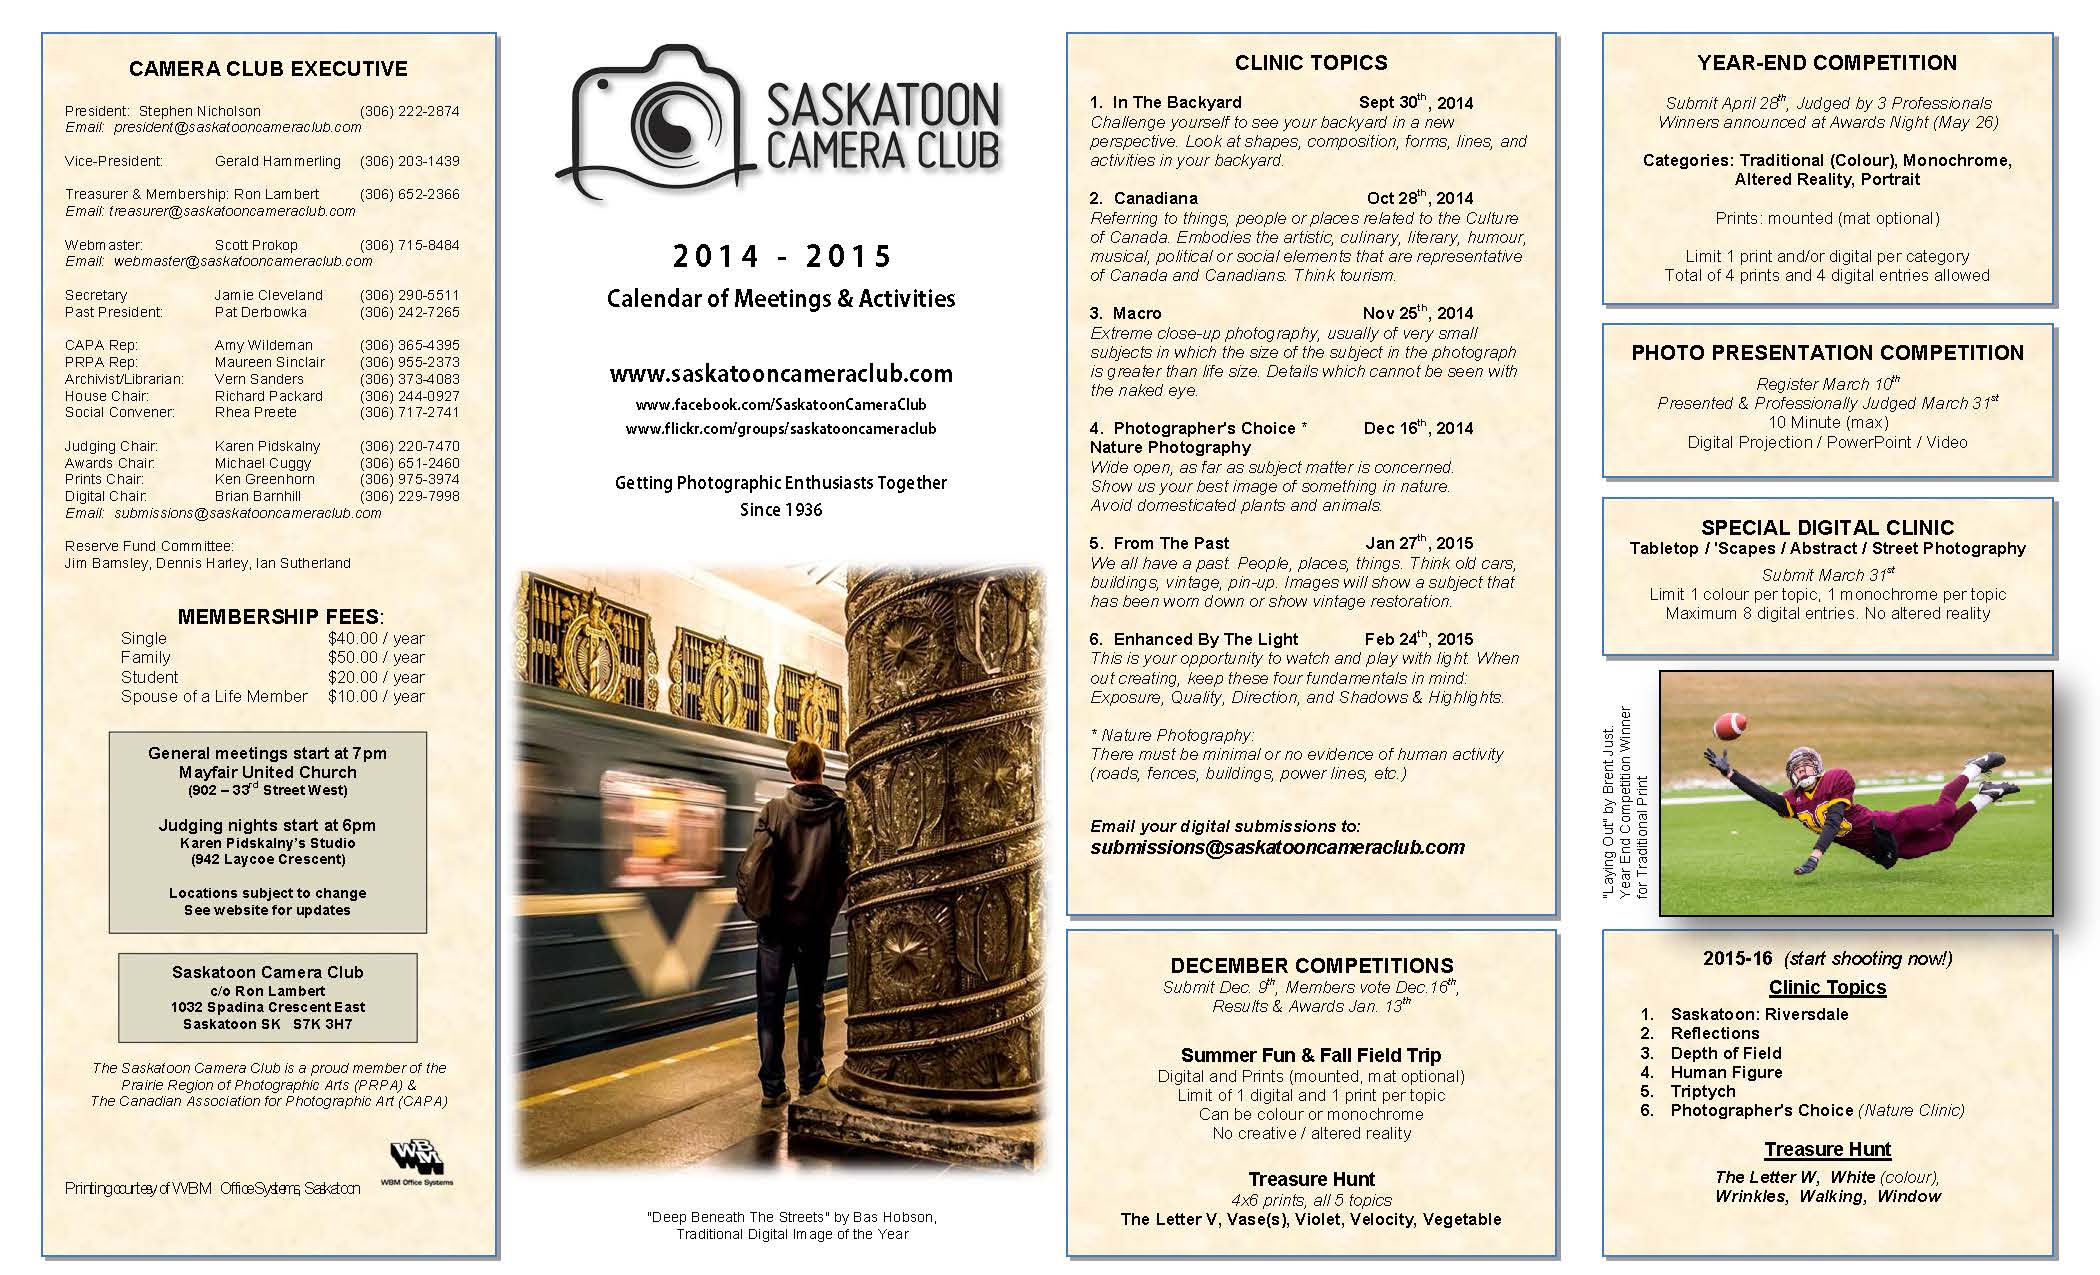 New 2014-2015 Brochure